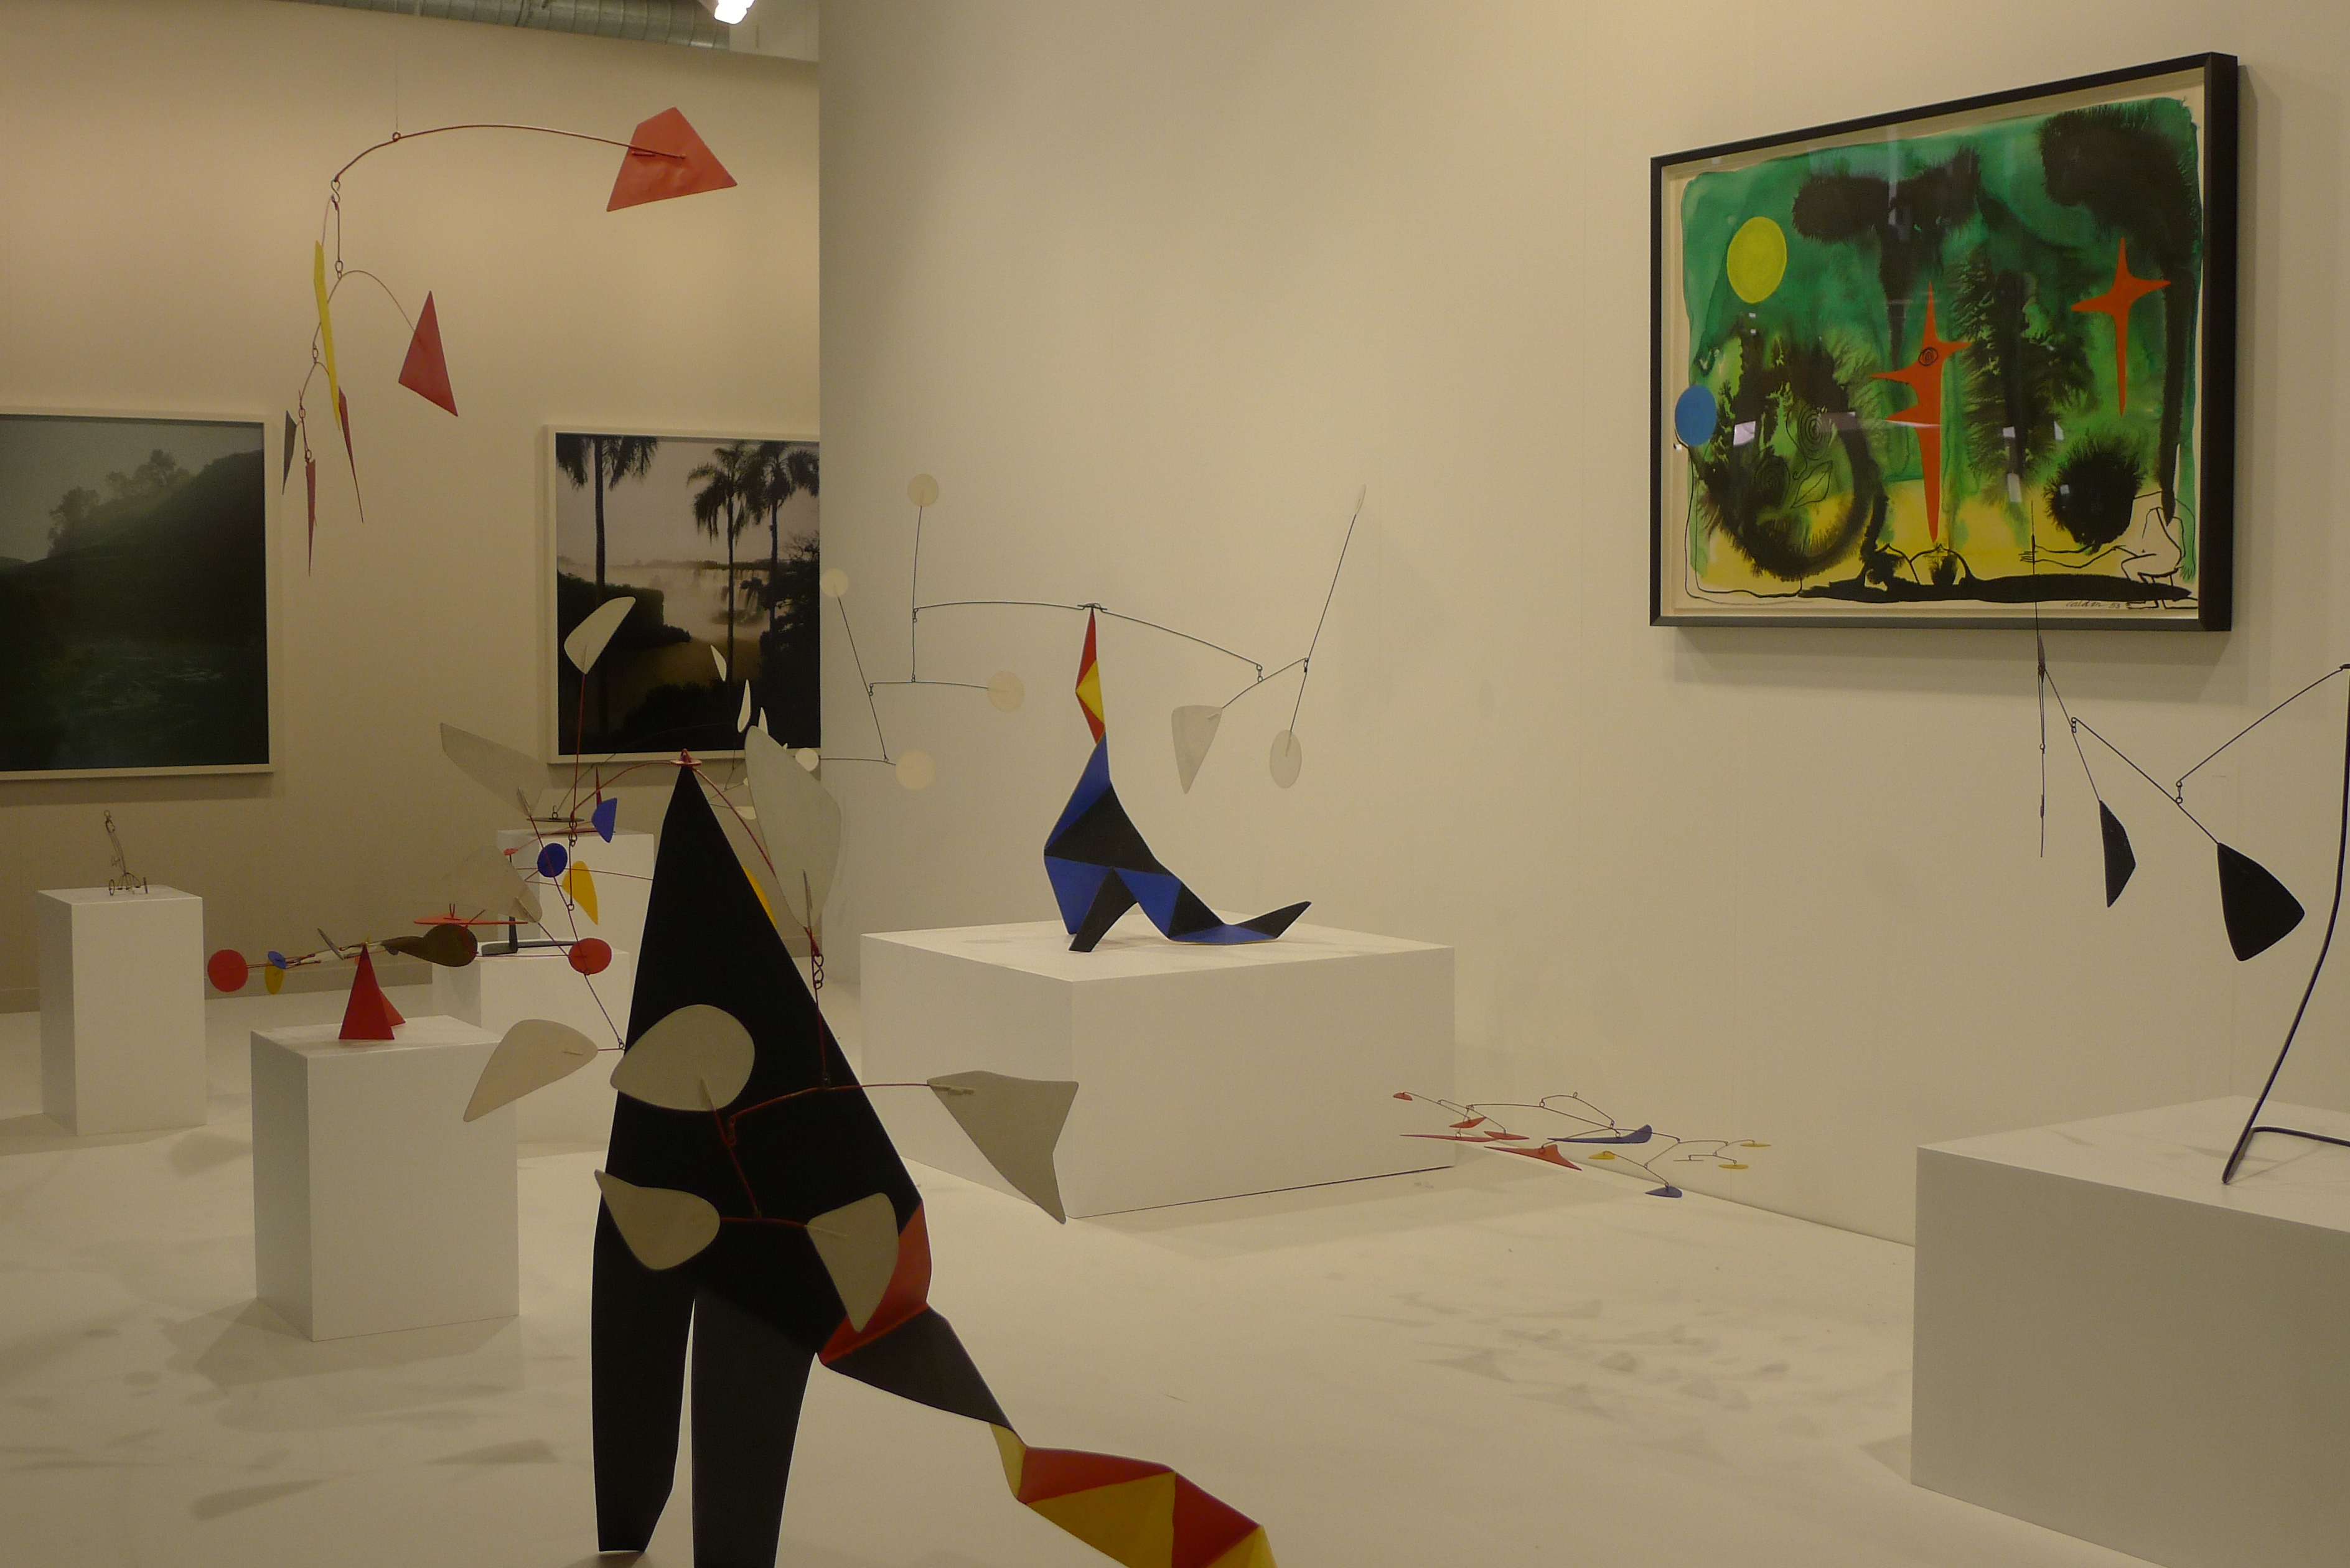 Collection of Alexander Calder mobiles and sculptures